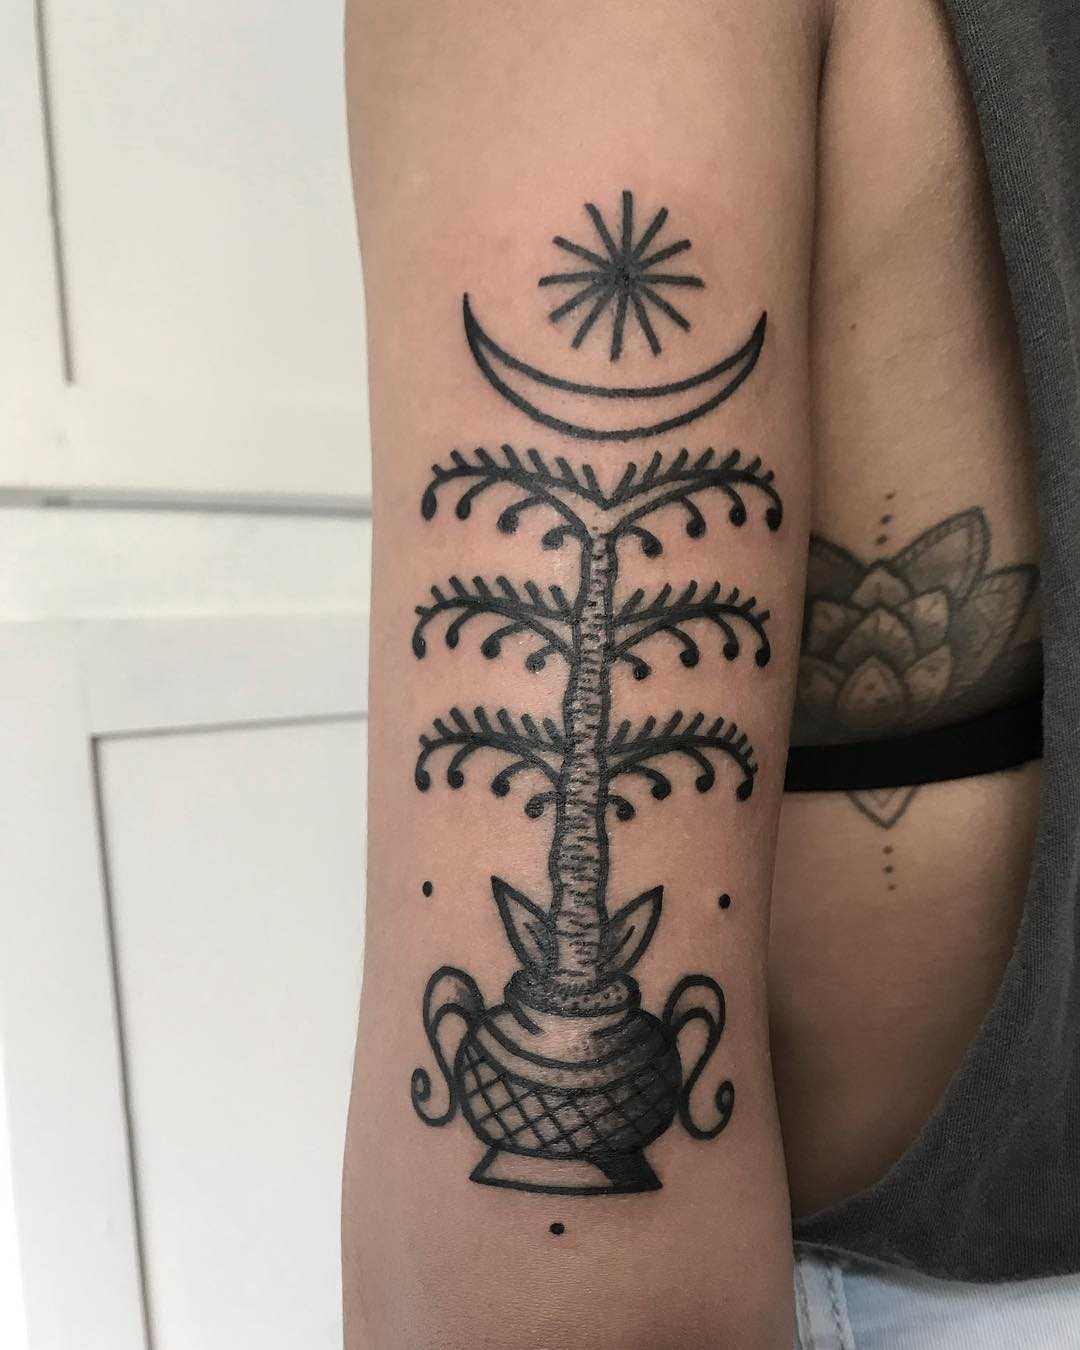 Stylized palm tree tattoo